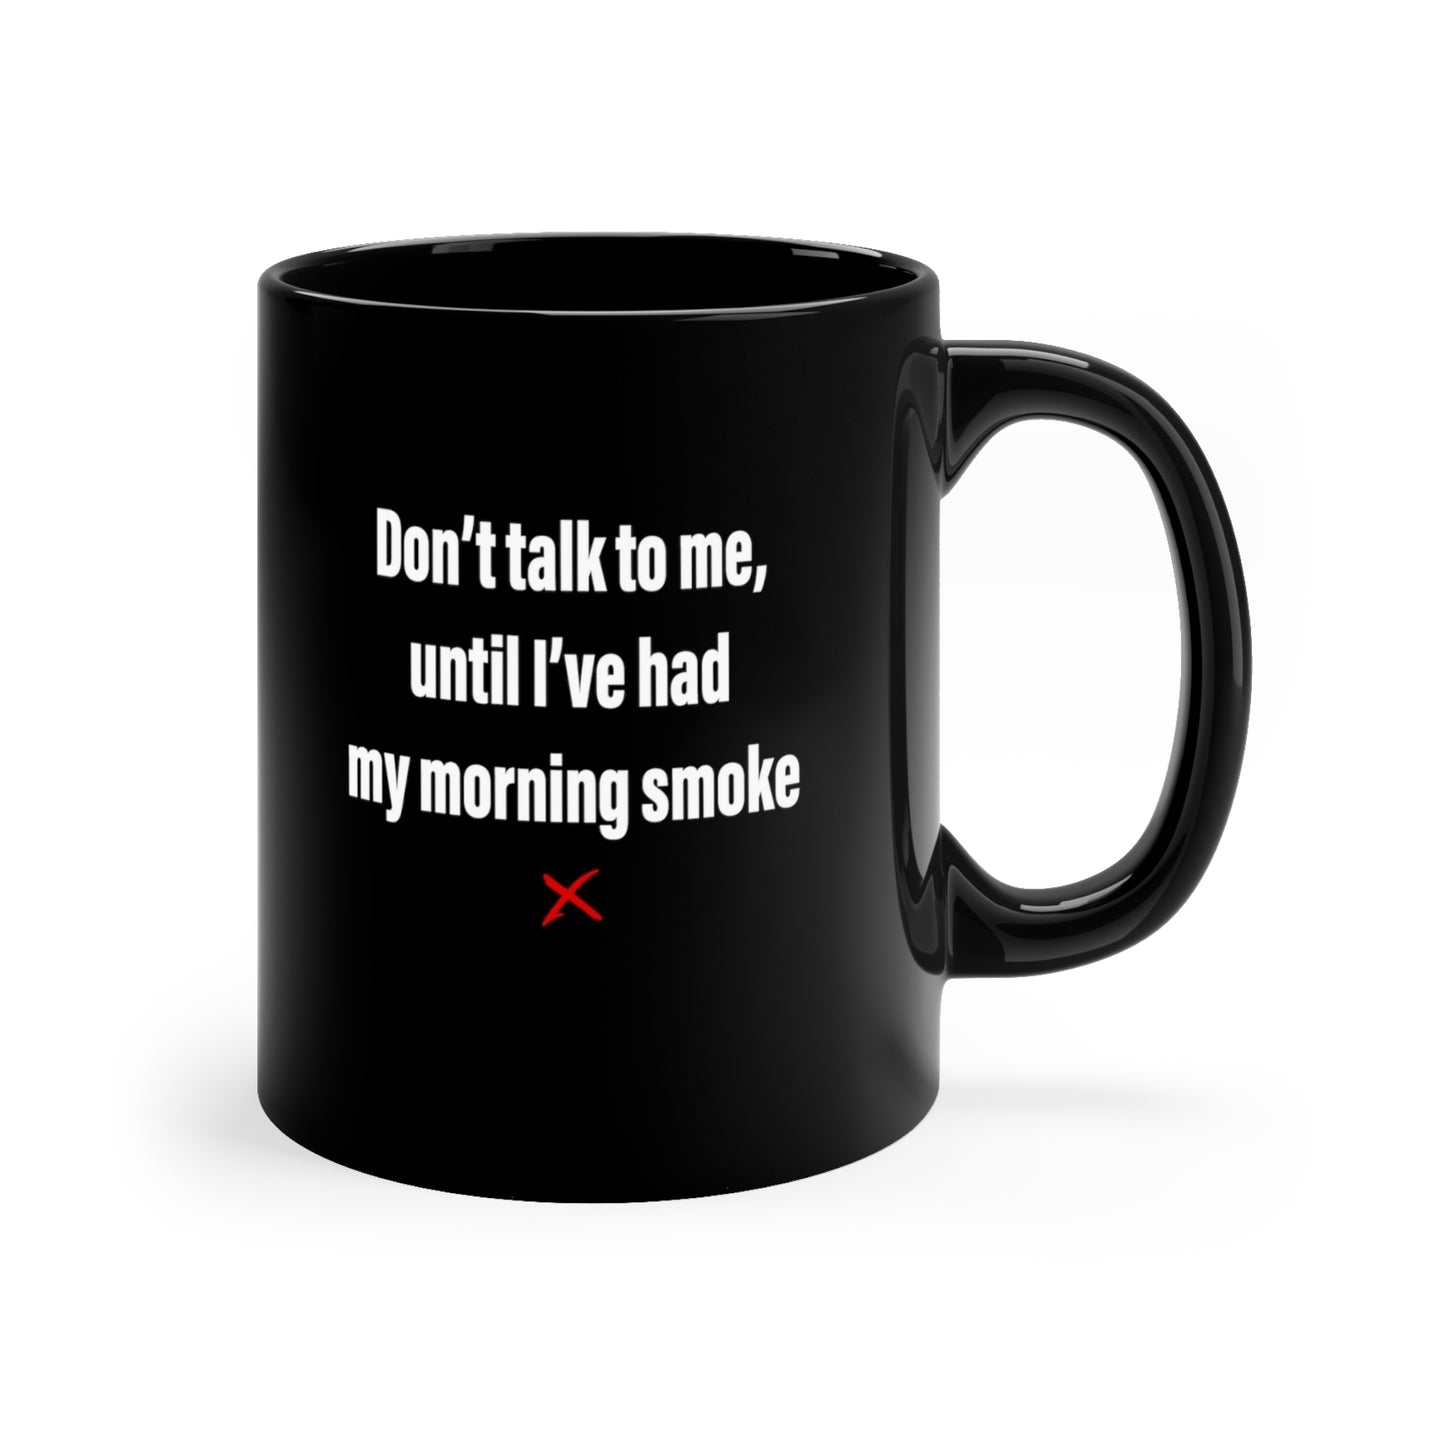 Don't talk to me, until I've had my morning smoke - Mug